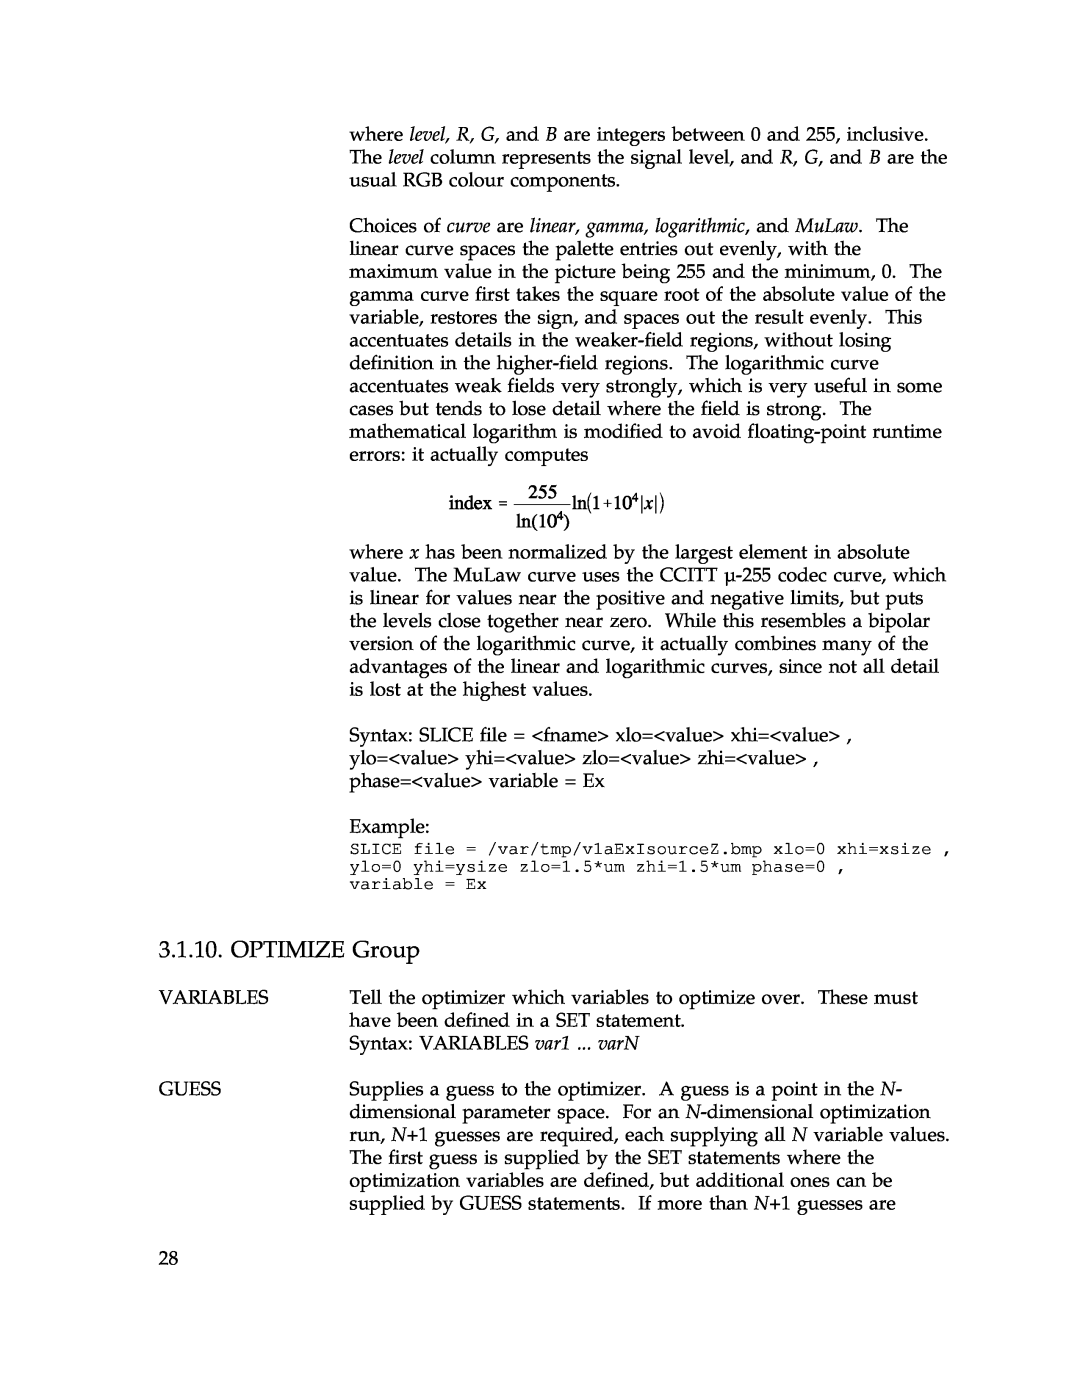 IBM Release 1.93 manual OPTIMIZE Group 